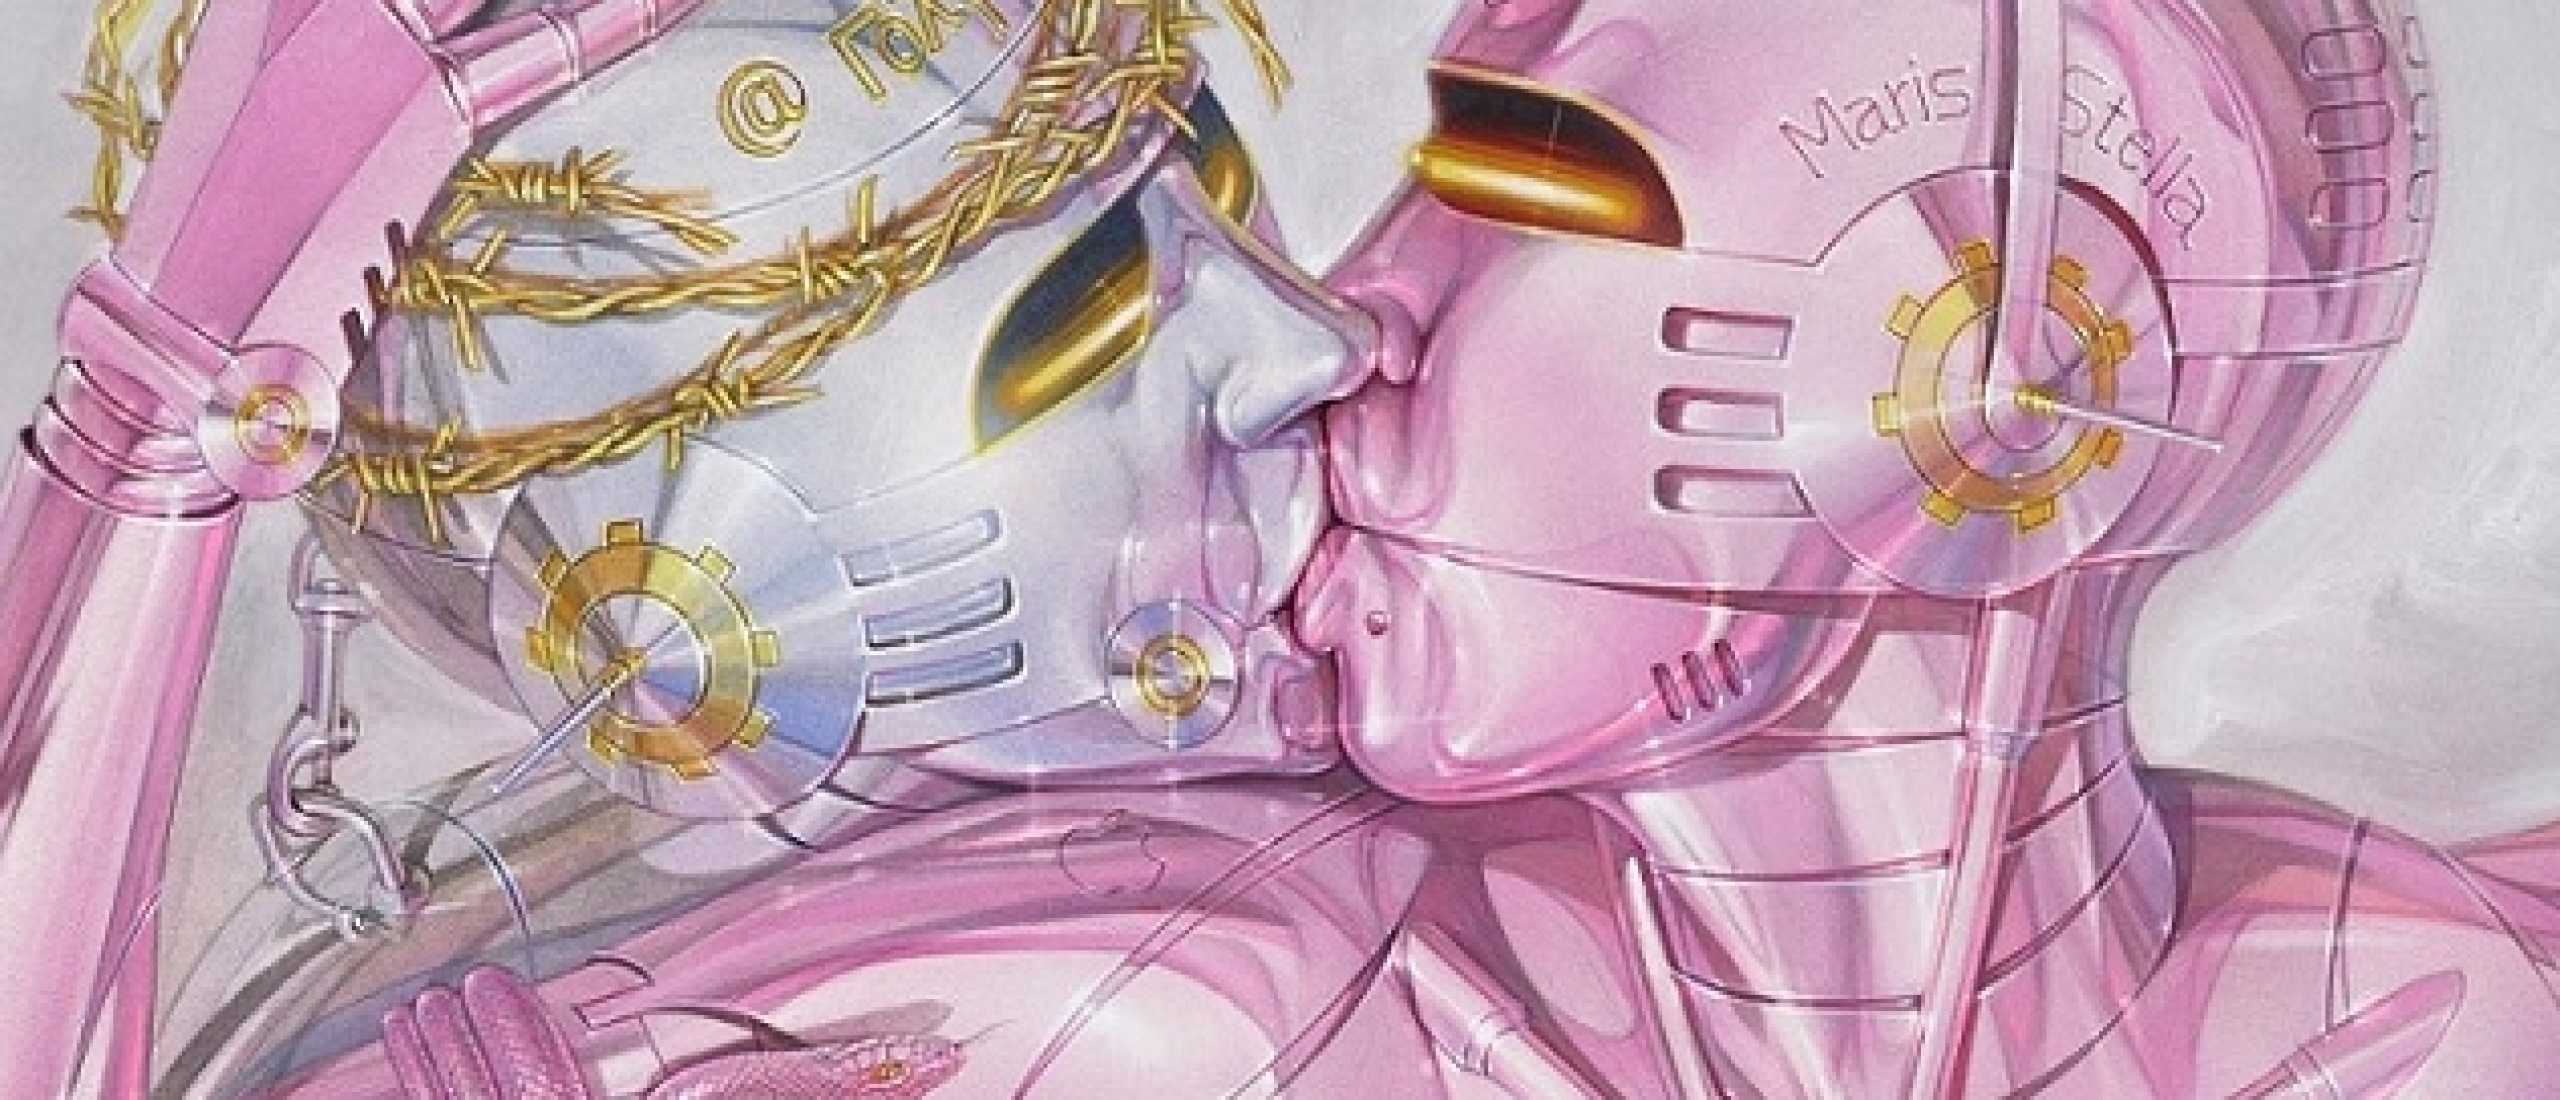 The Sex Cyborgs Of The Japanese Artist Hajime Sorayama